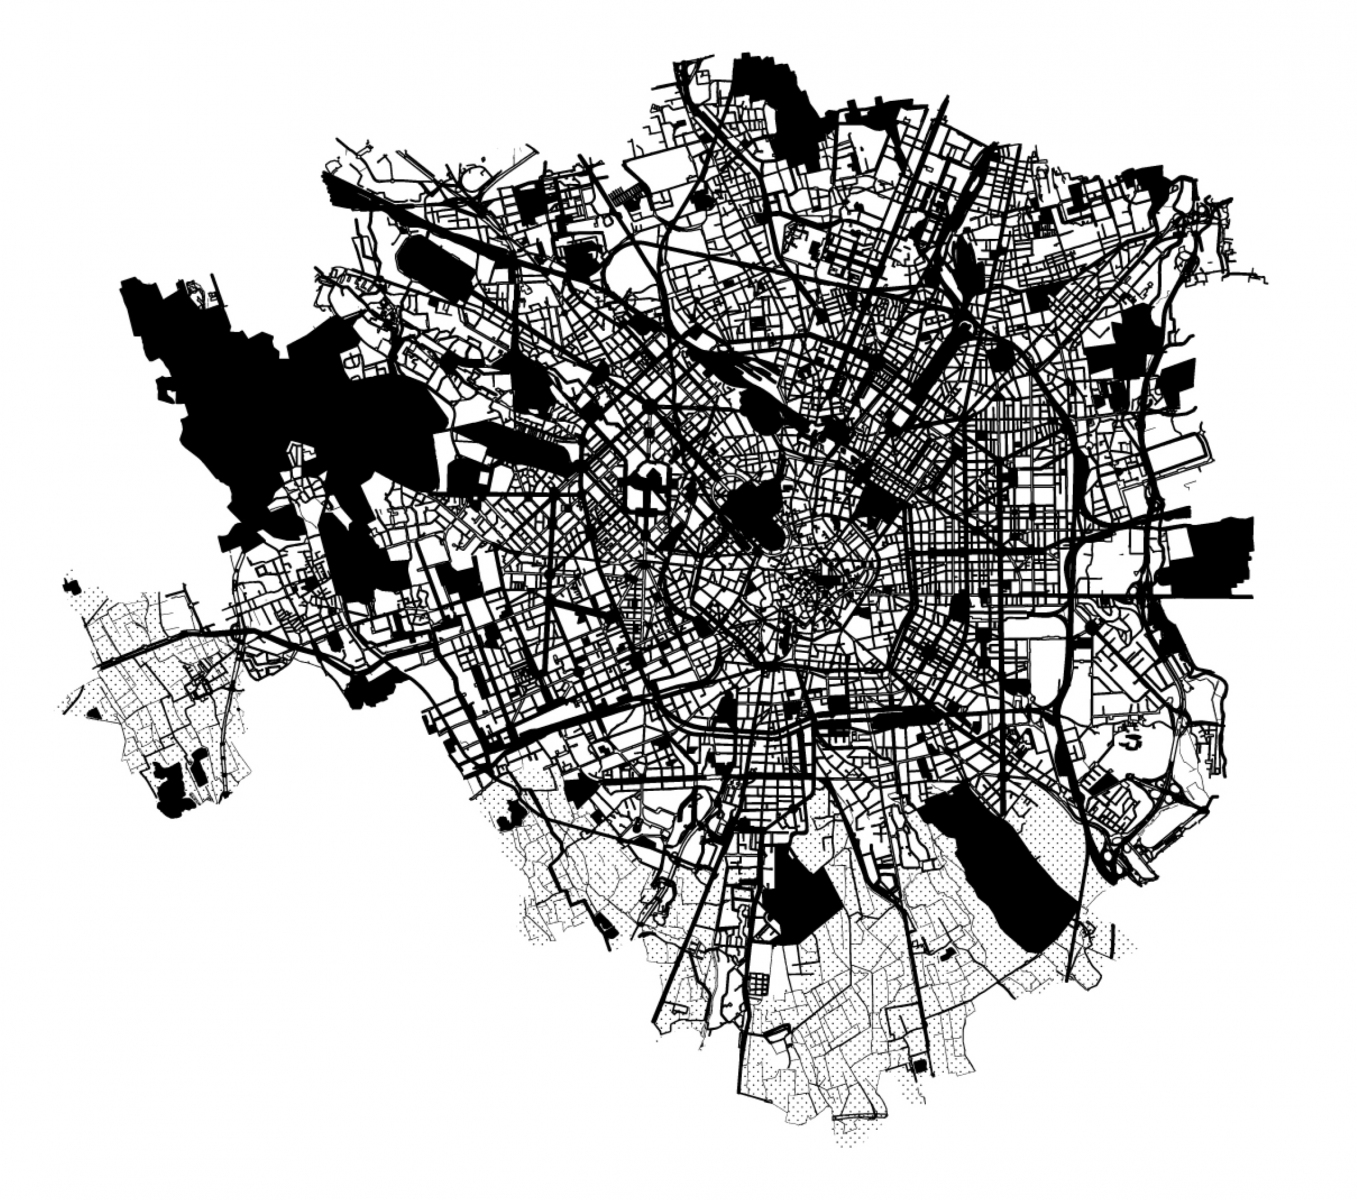 QTA_100-Public-spaces-for-Milan_2